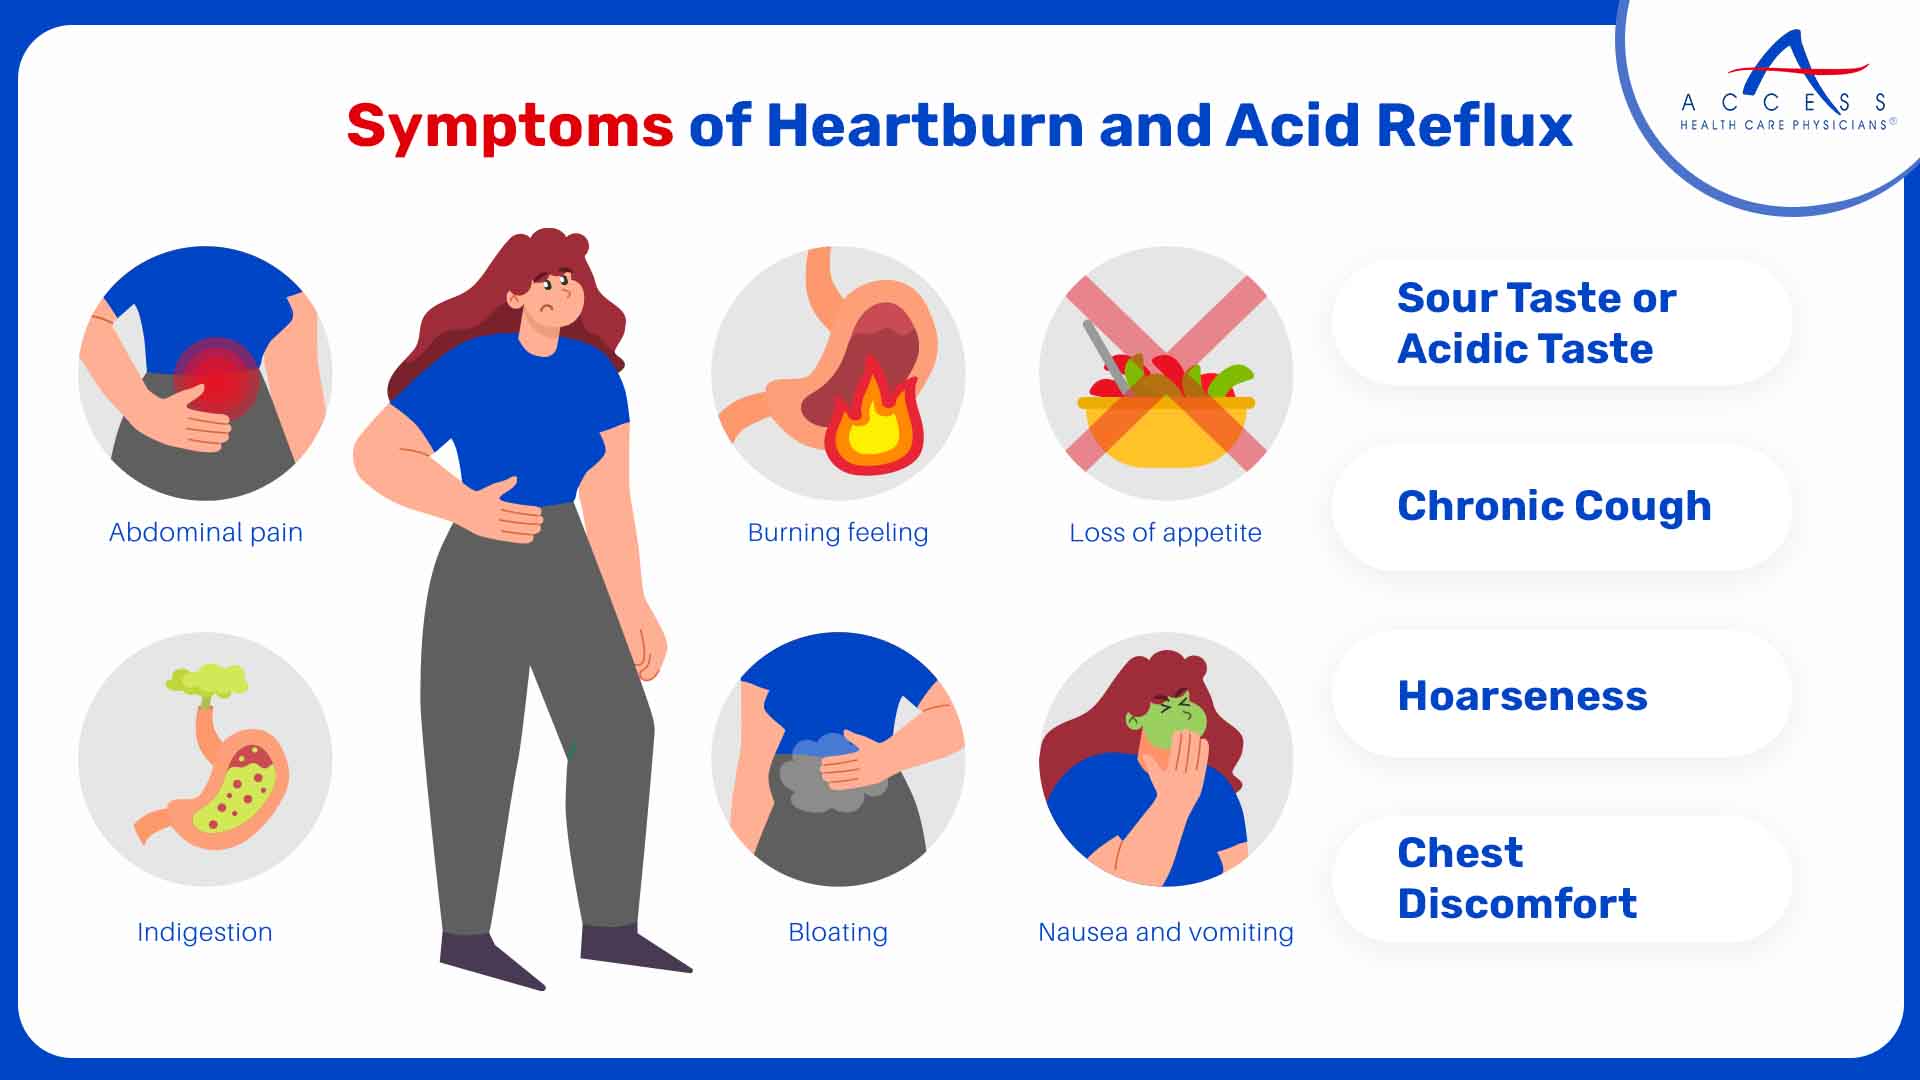 Symptoms of Heartburn and Acid Reflux